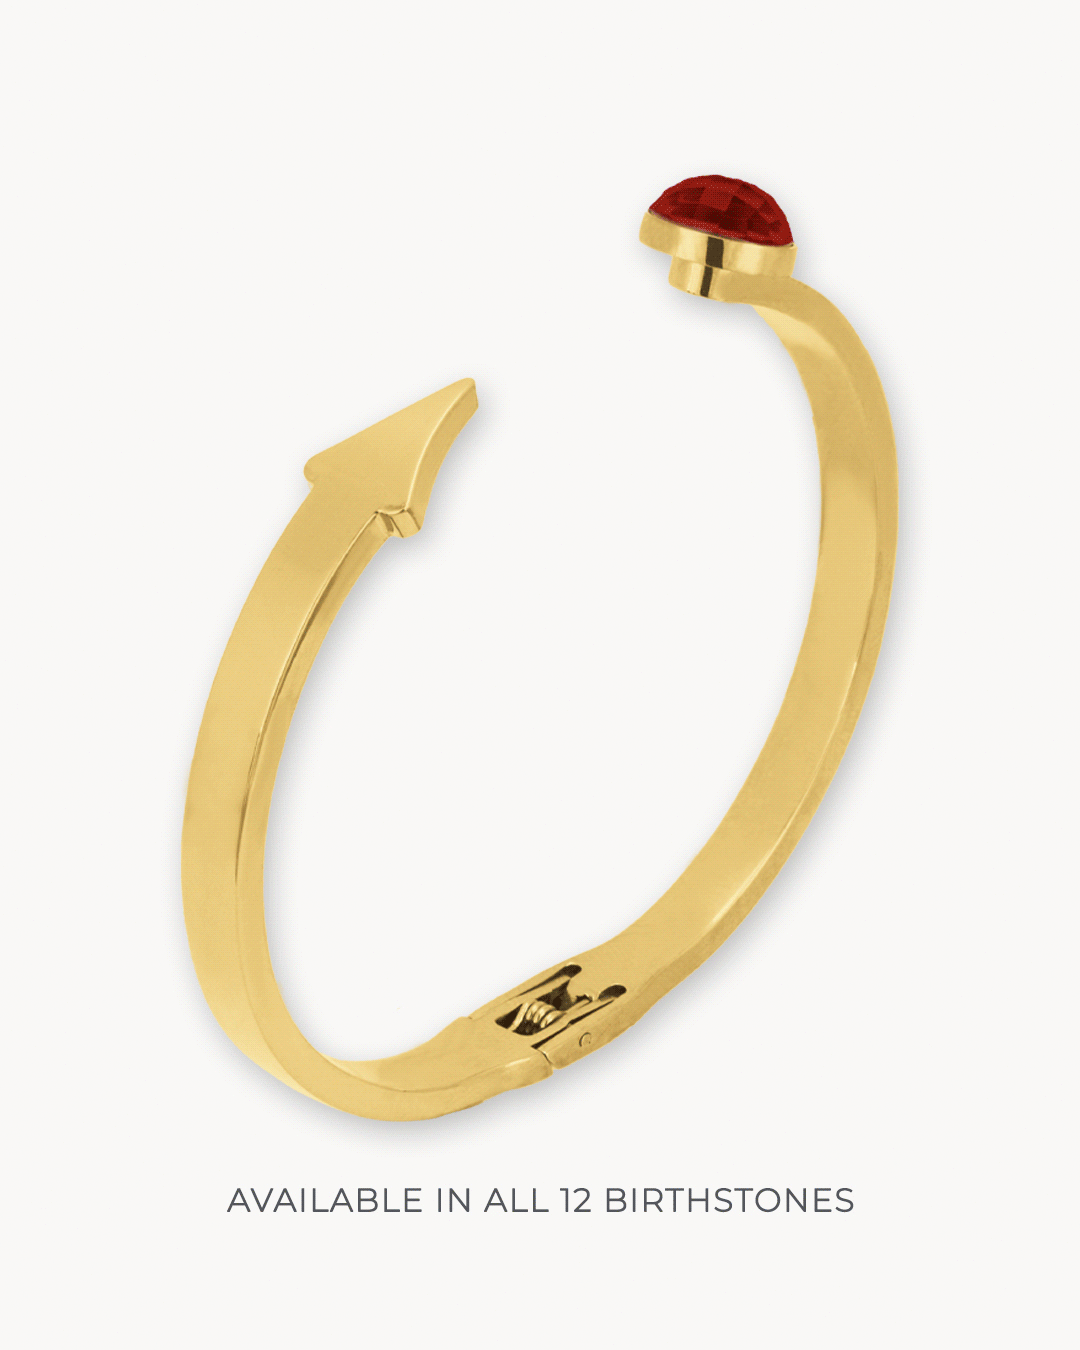 Amor-Geburtsstein-Armreif-Set, Gold mit roter Schmuckschatulle